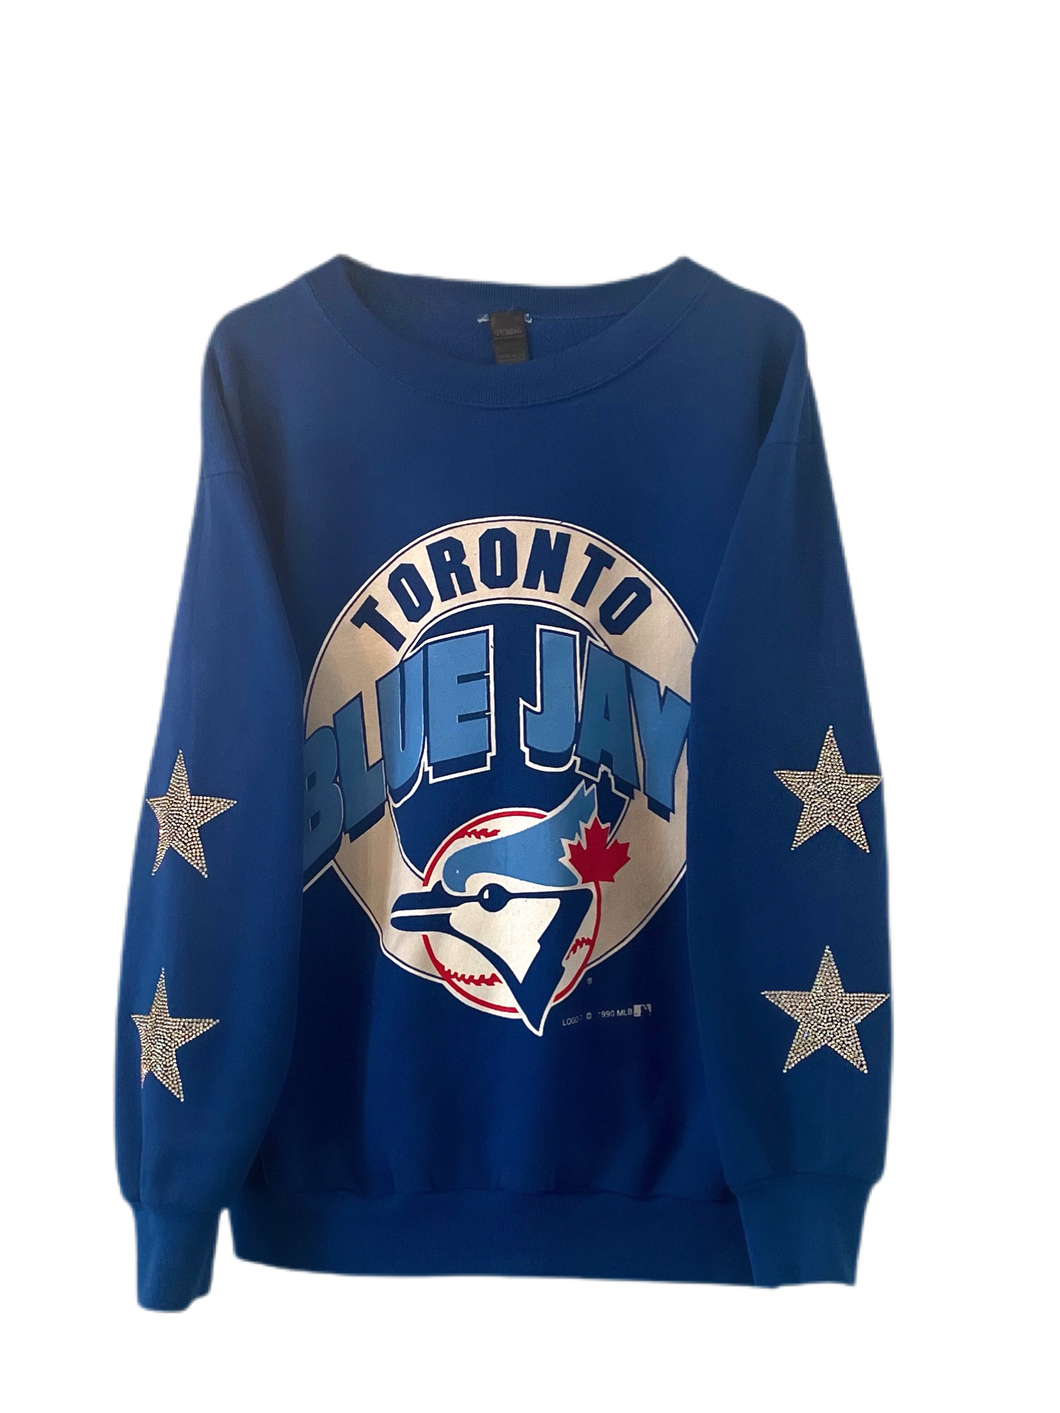 Toronto Blue Jays, MLB One of a KIND Vintage Sweatshirt with Crystal Star Design